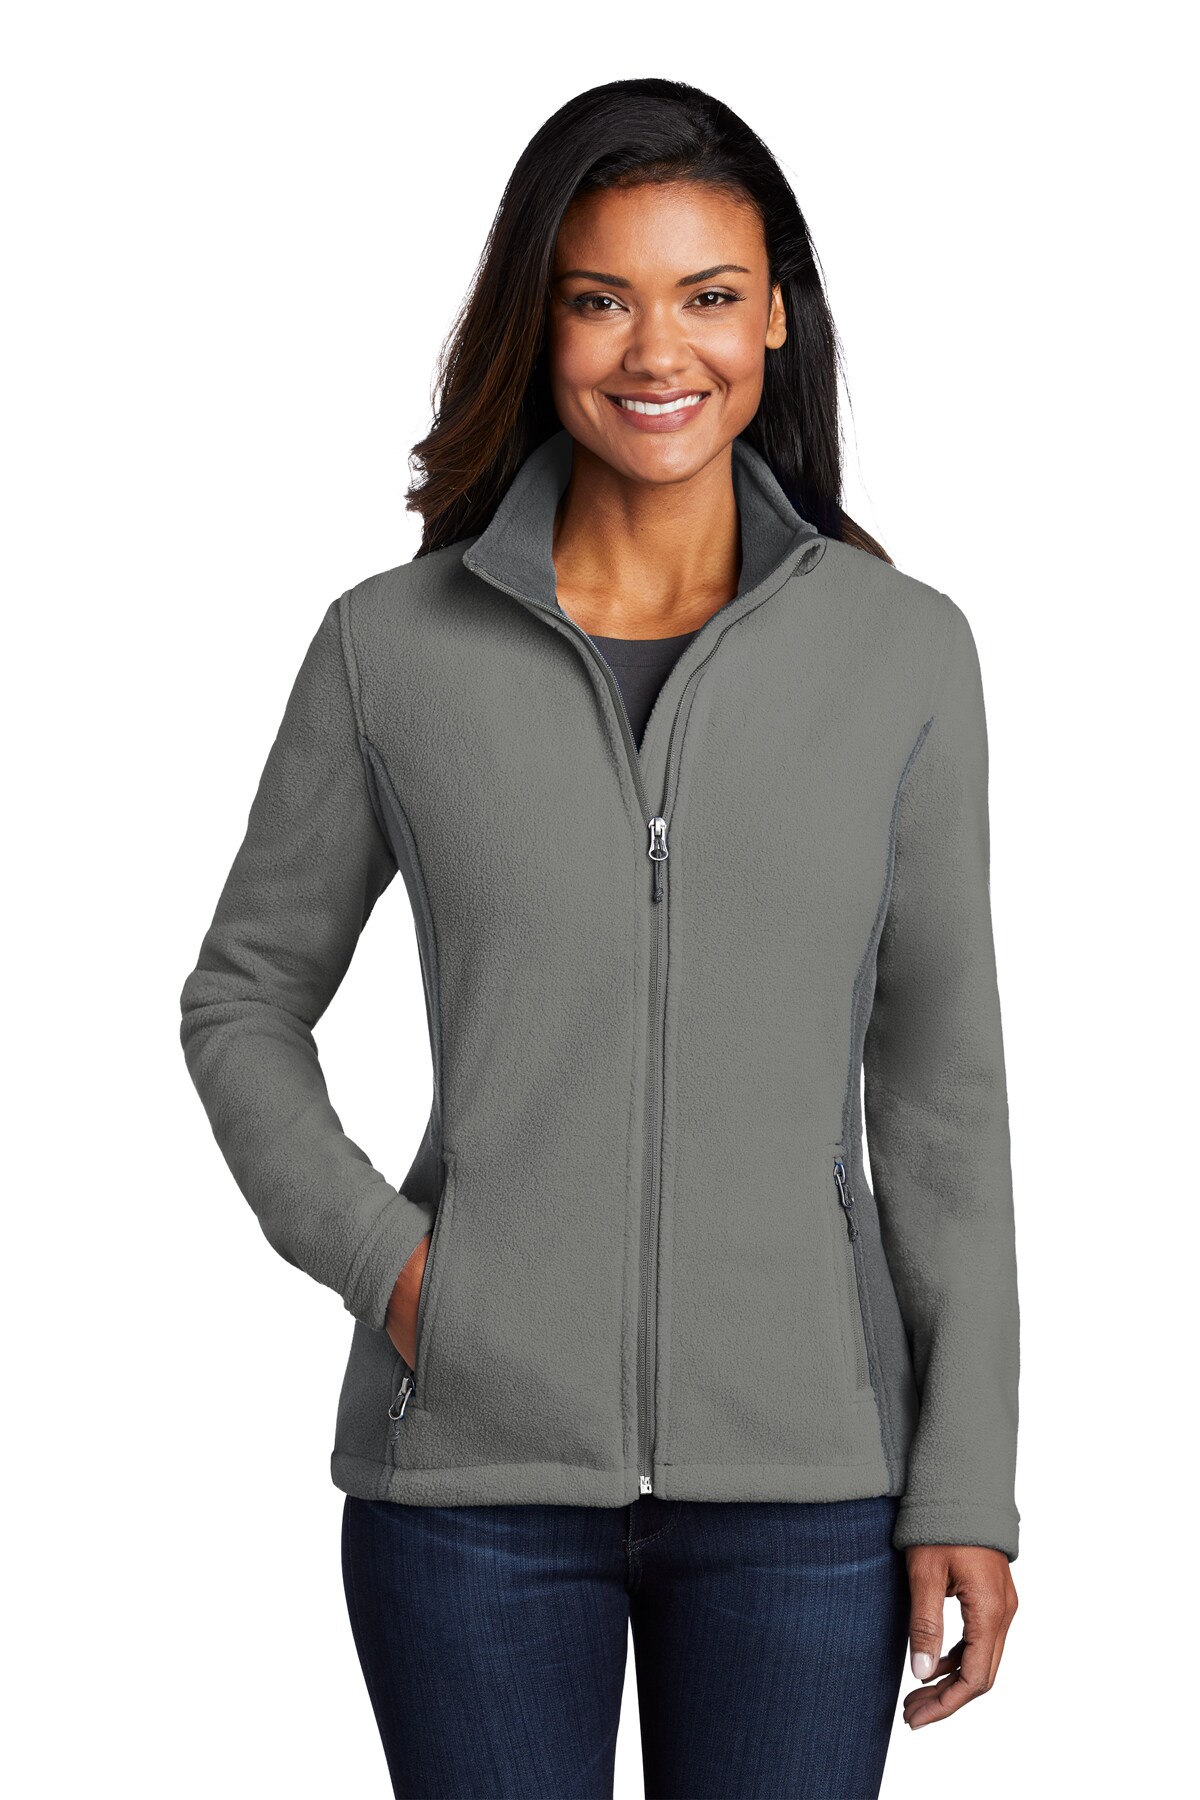 Ladies Colorblock Value Fleece Jacket popular quality apparel With